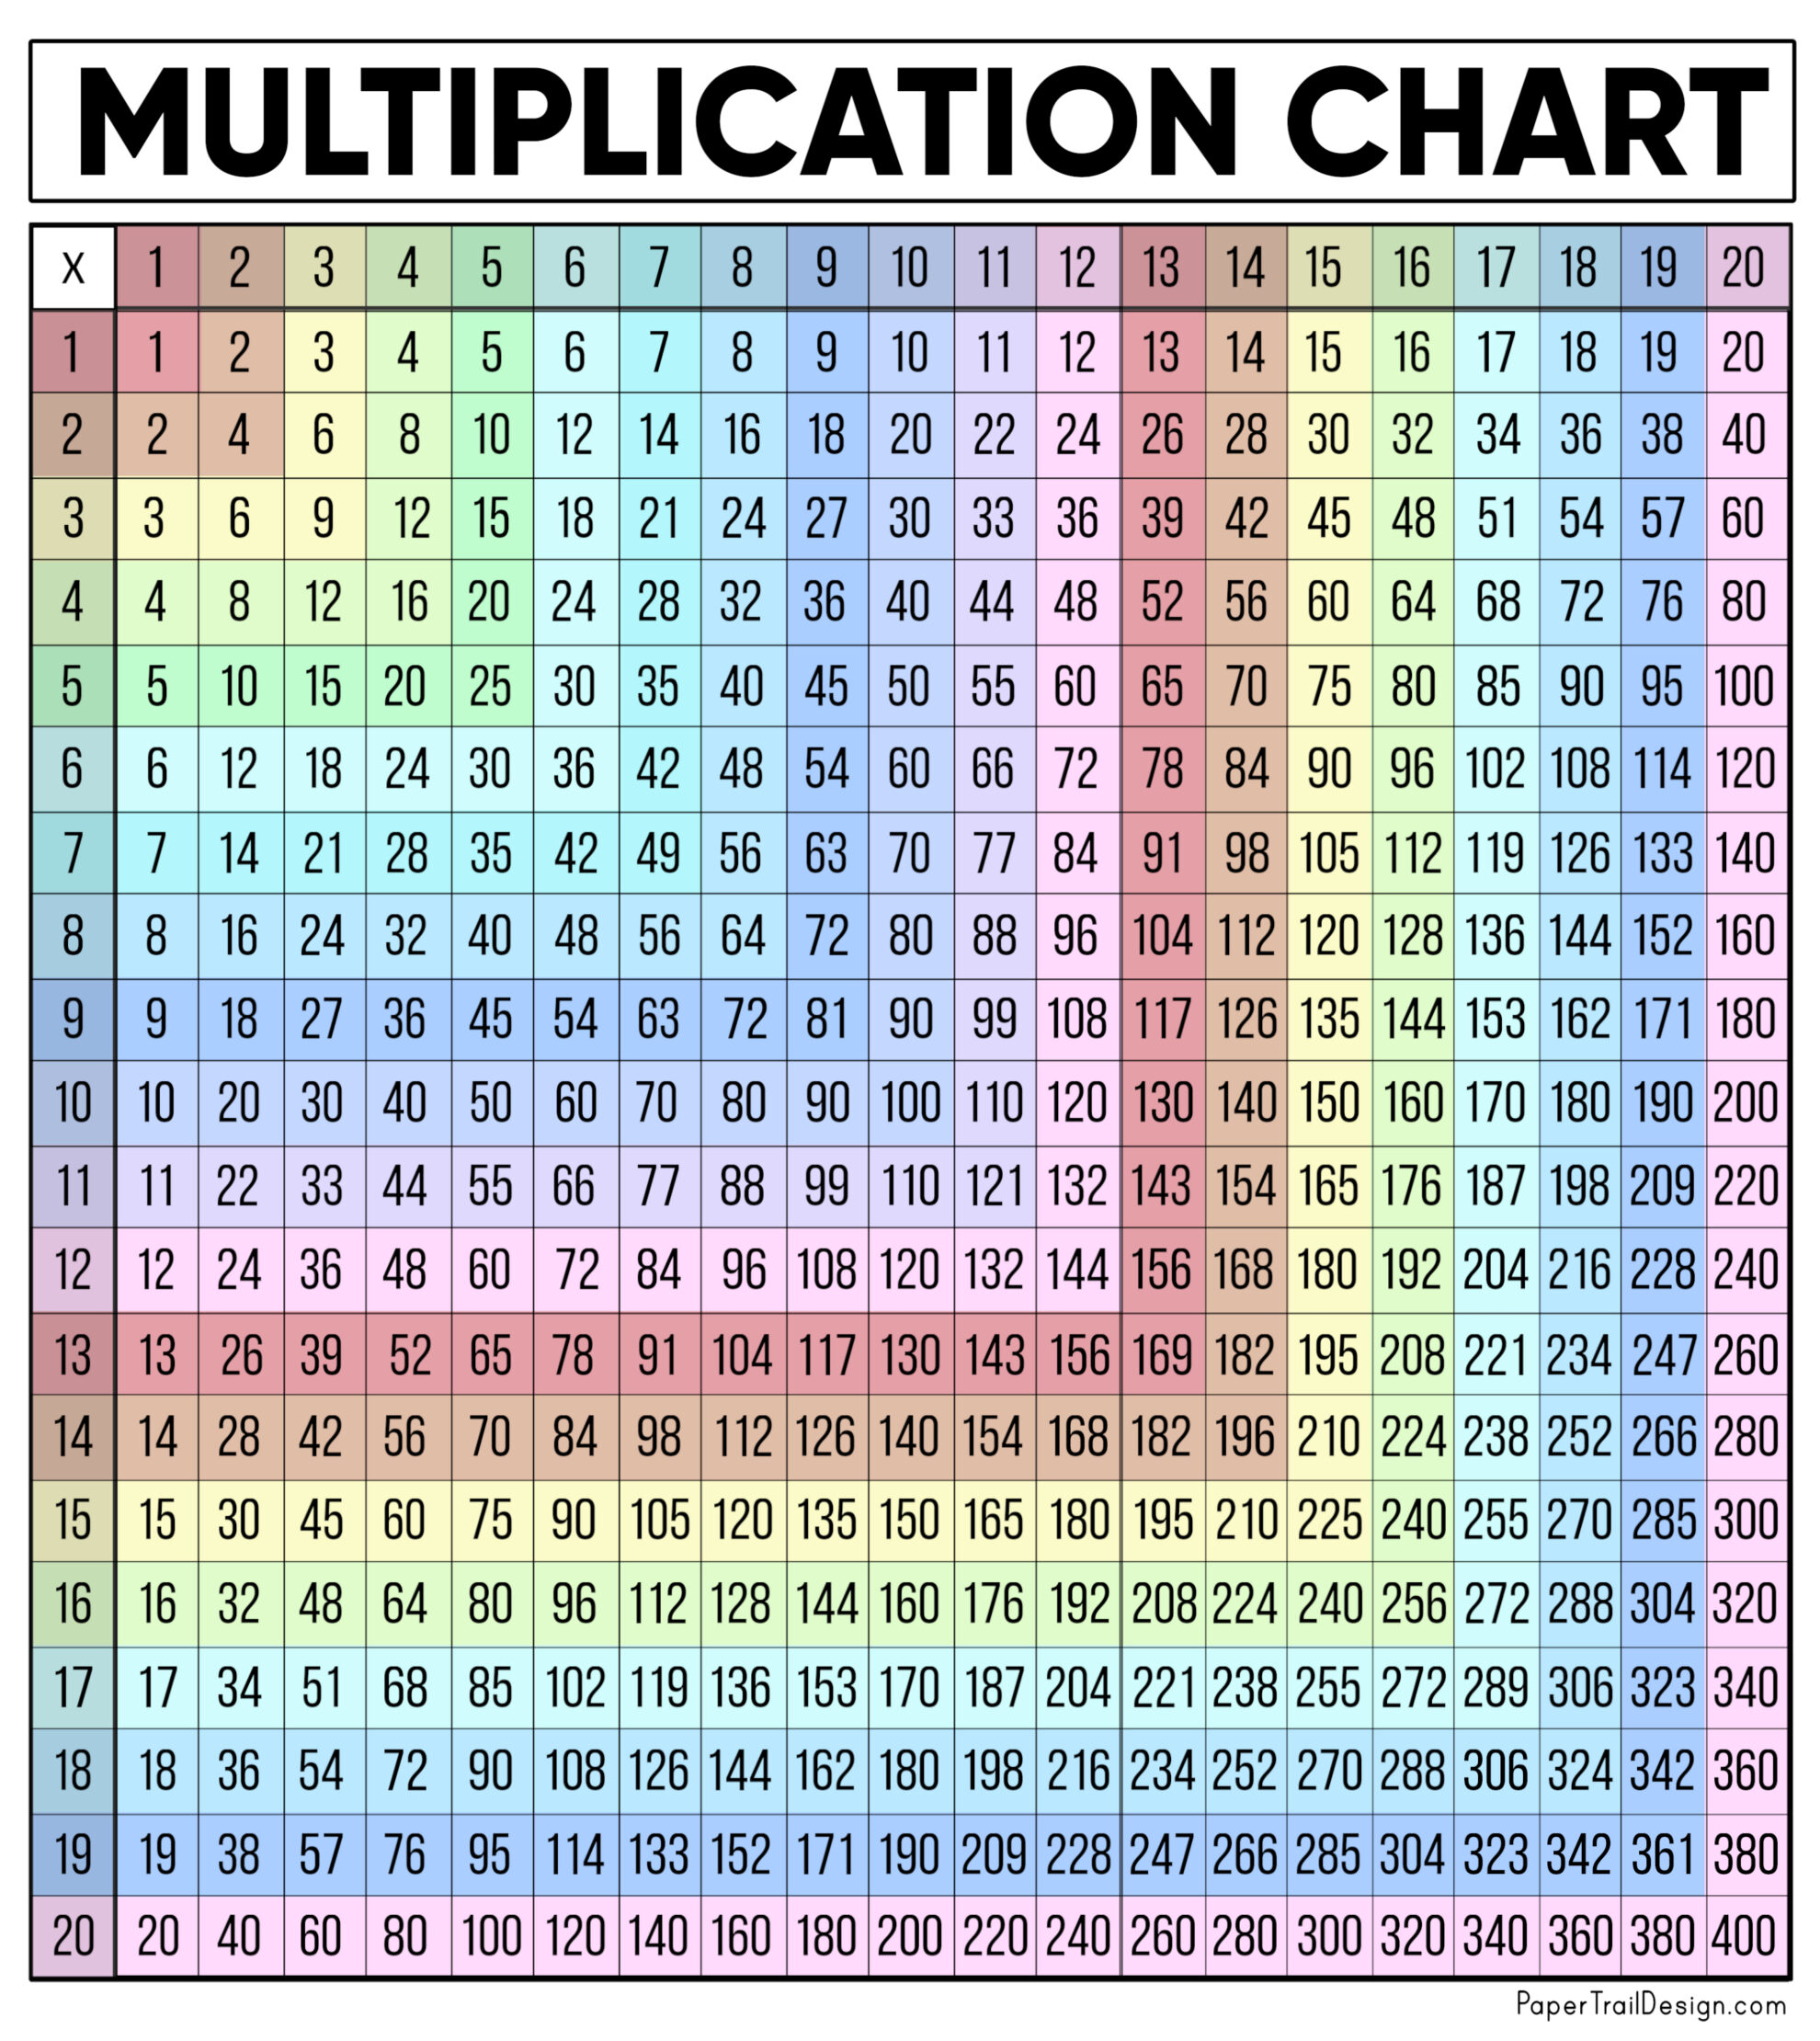 multiplication-chart-1-20